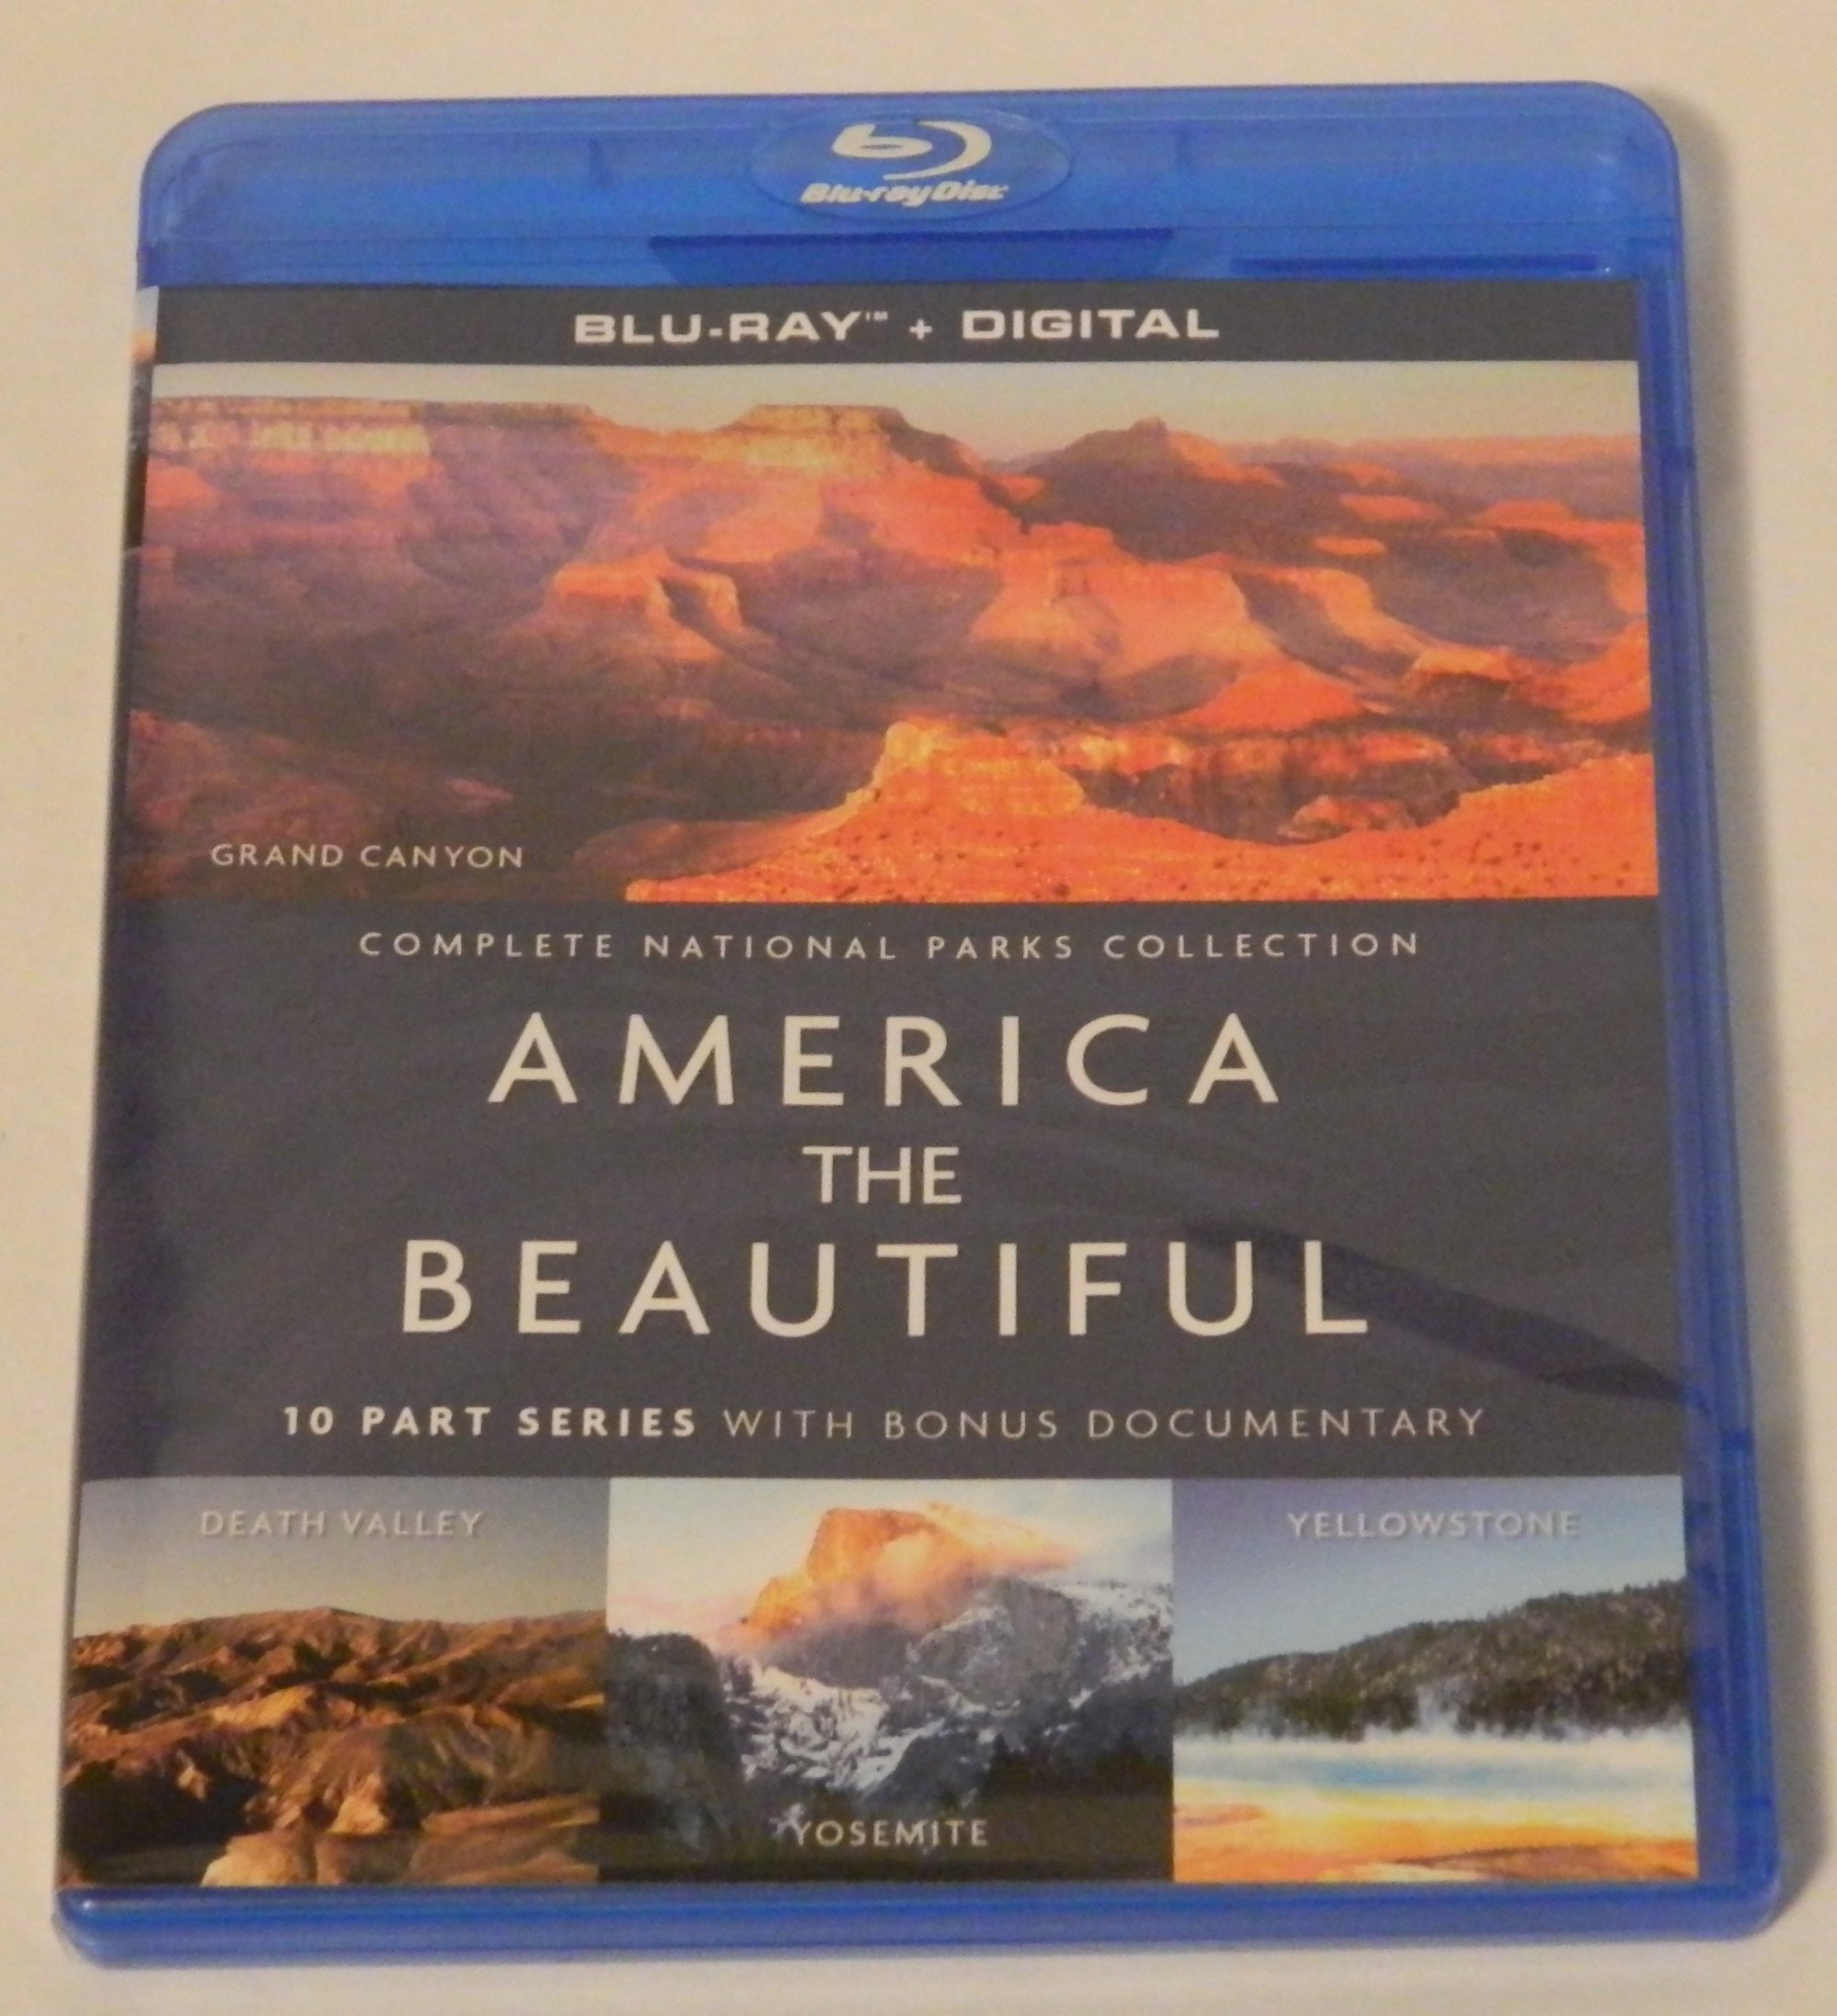 America the Beautiful Blu-ray Review